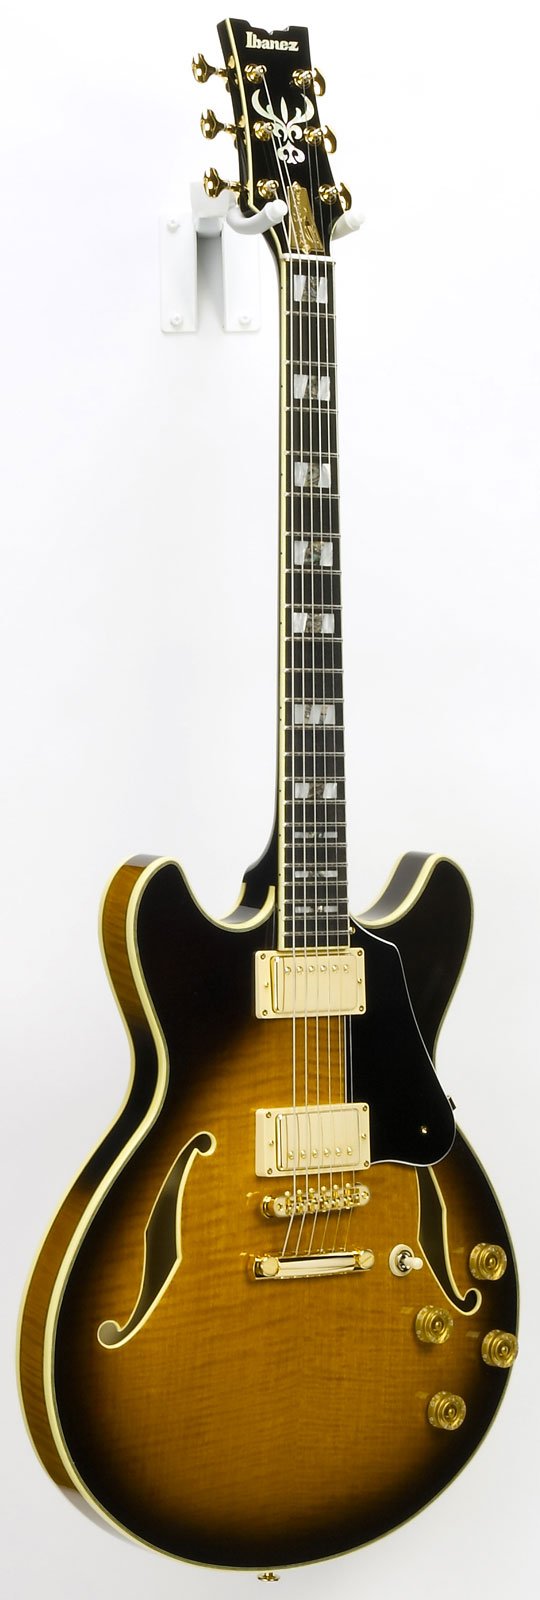 Guitare IBANEZ JSM 100 modèle John scofield